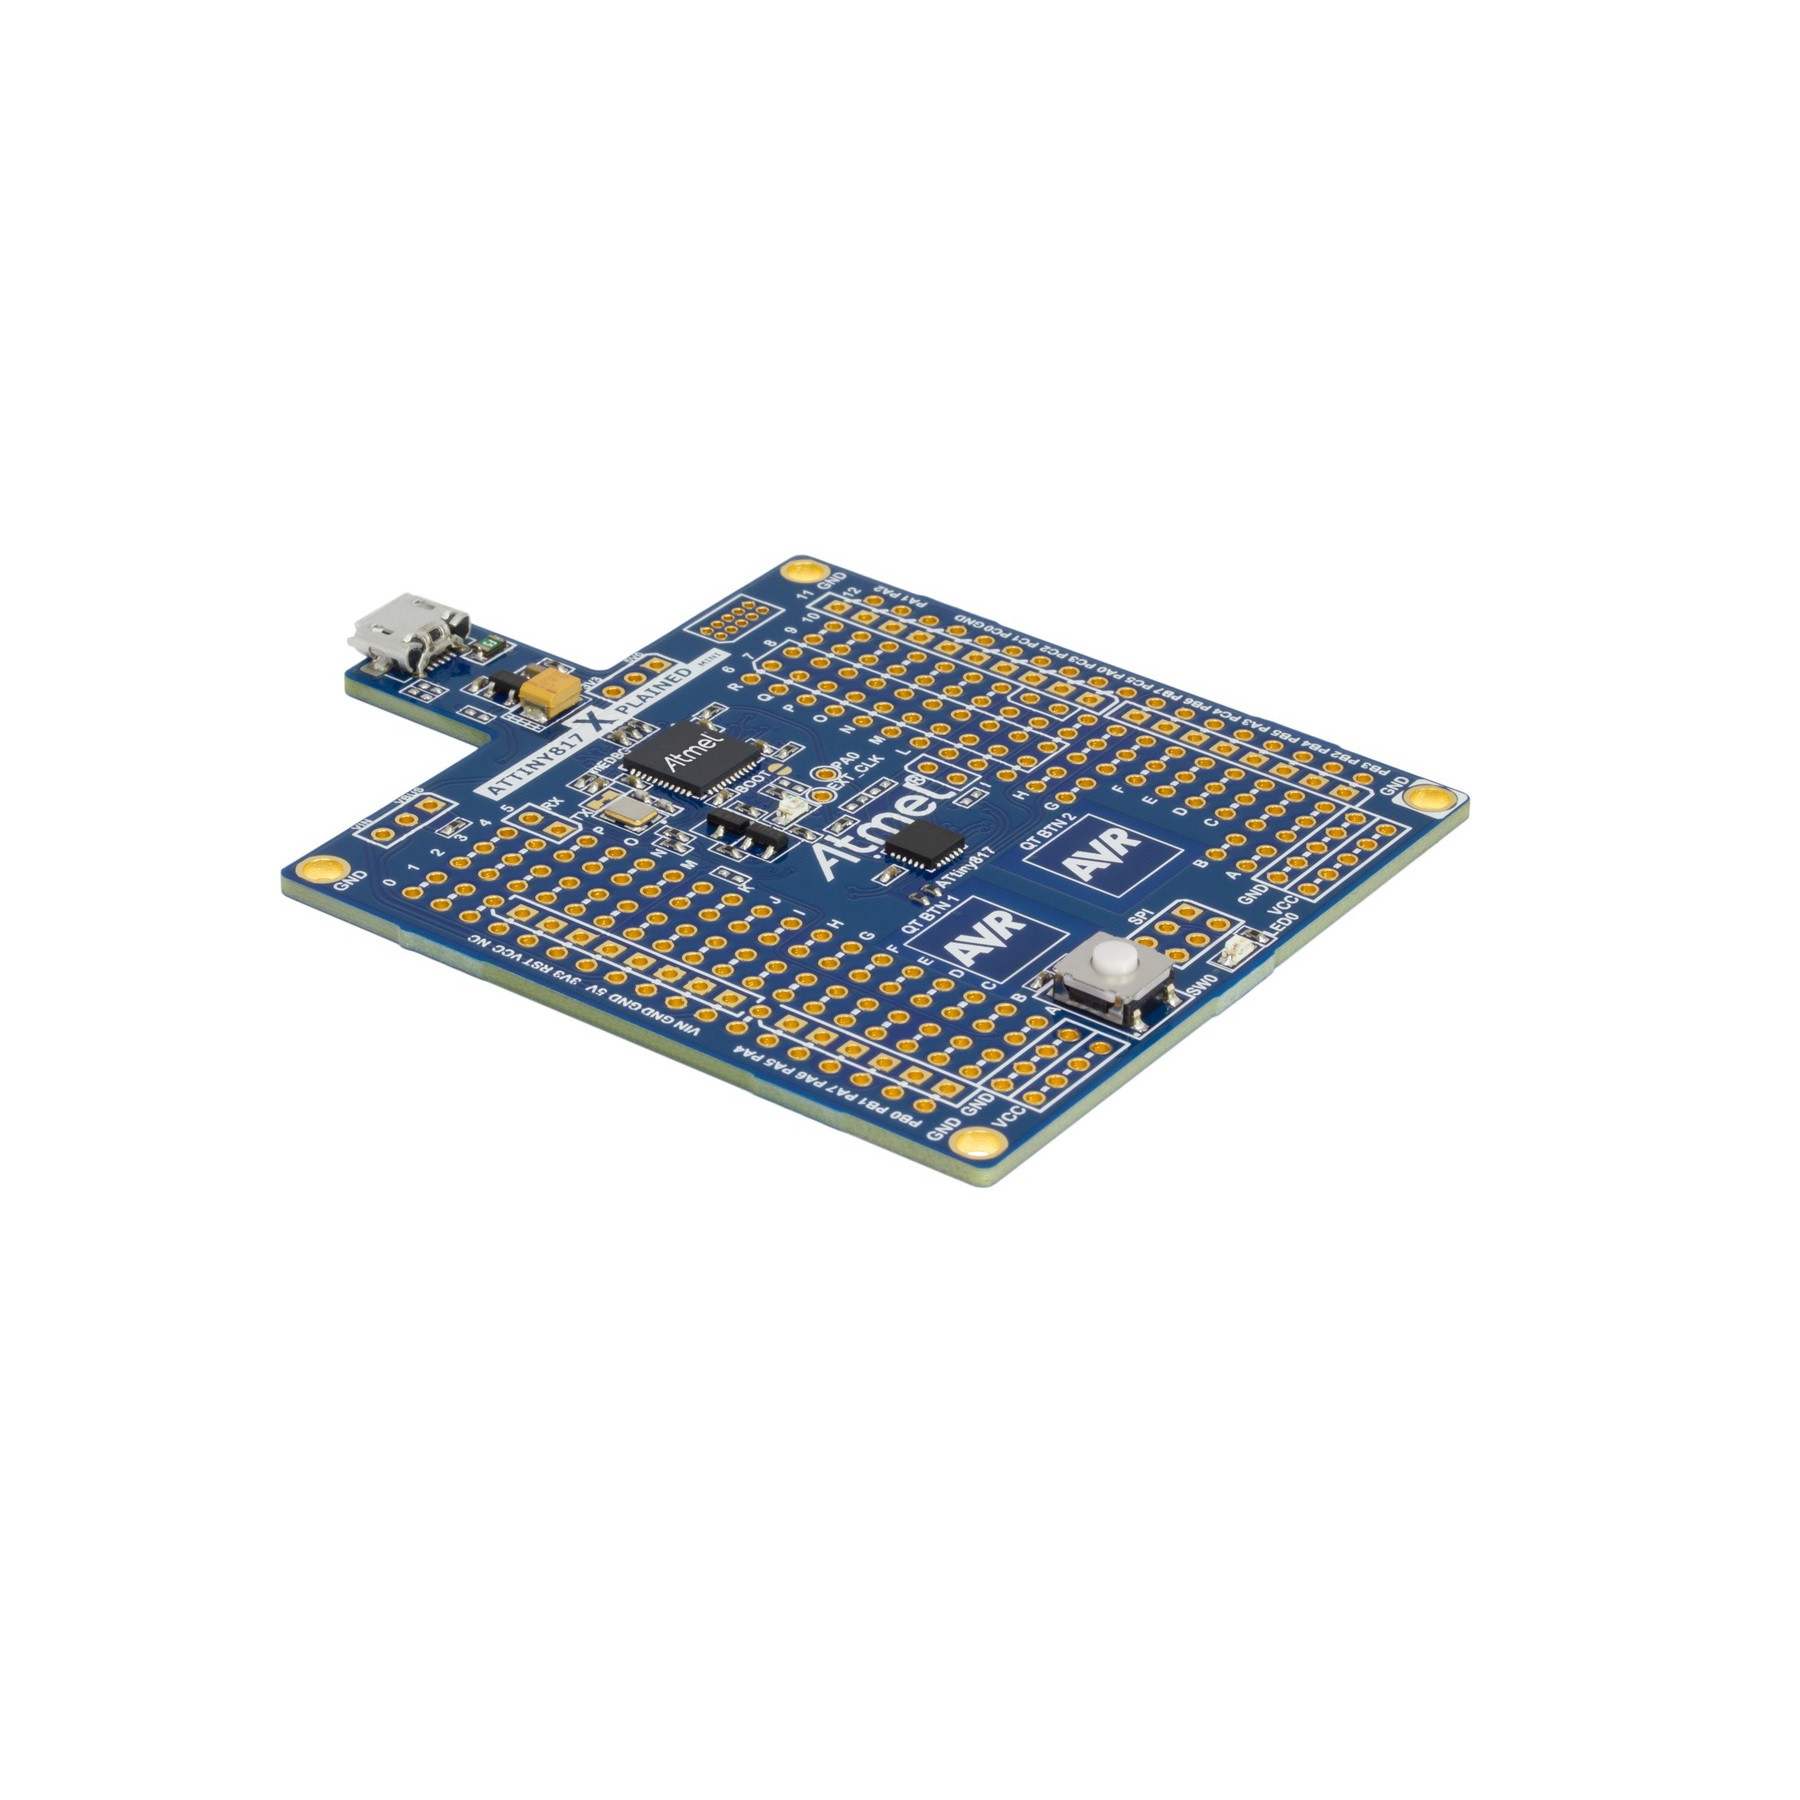 Microchip Microchip Attiny817 Xmini Evaluation Kit Attiny817816814417 Mcus Xplained Mini On Board Debugger Capacitive Touch 1